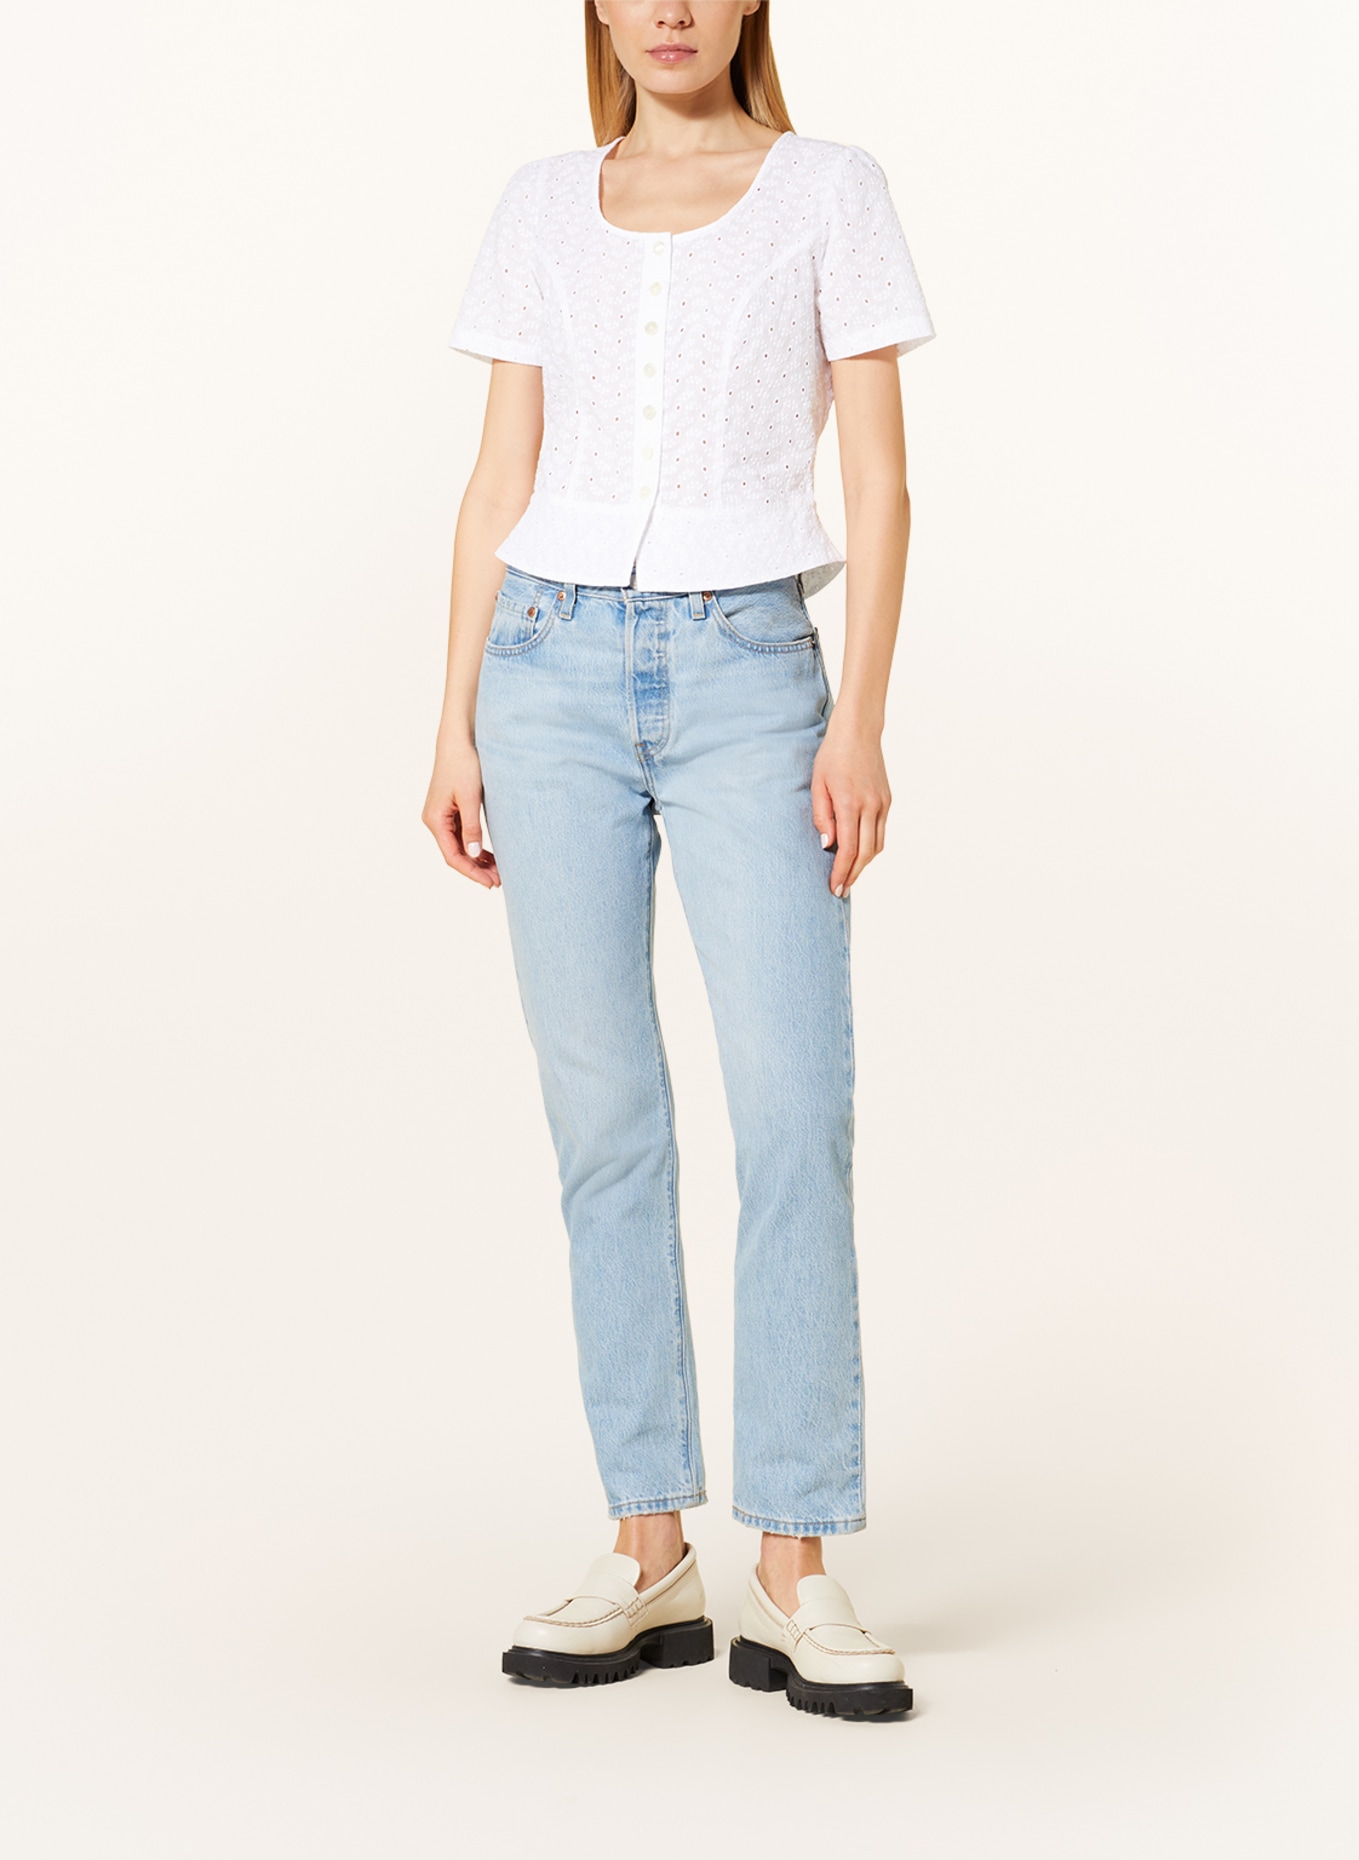 Hammerschmid Dirndl blouse MANUELA in lace, Color: WHITE (Image 4)